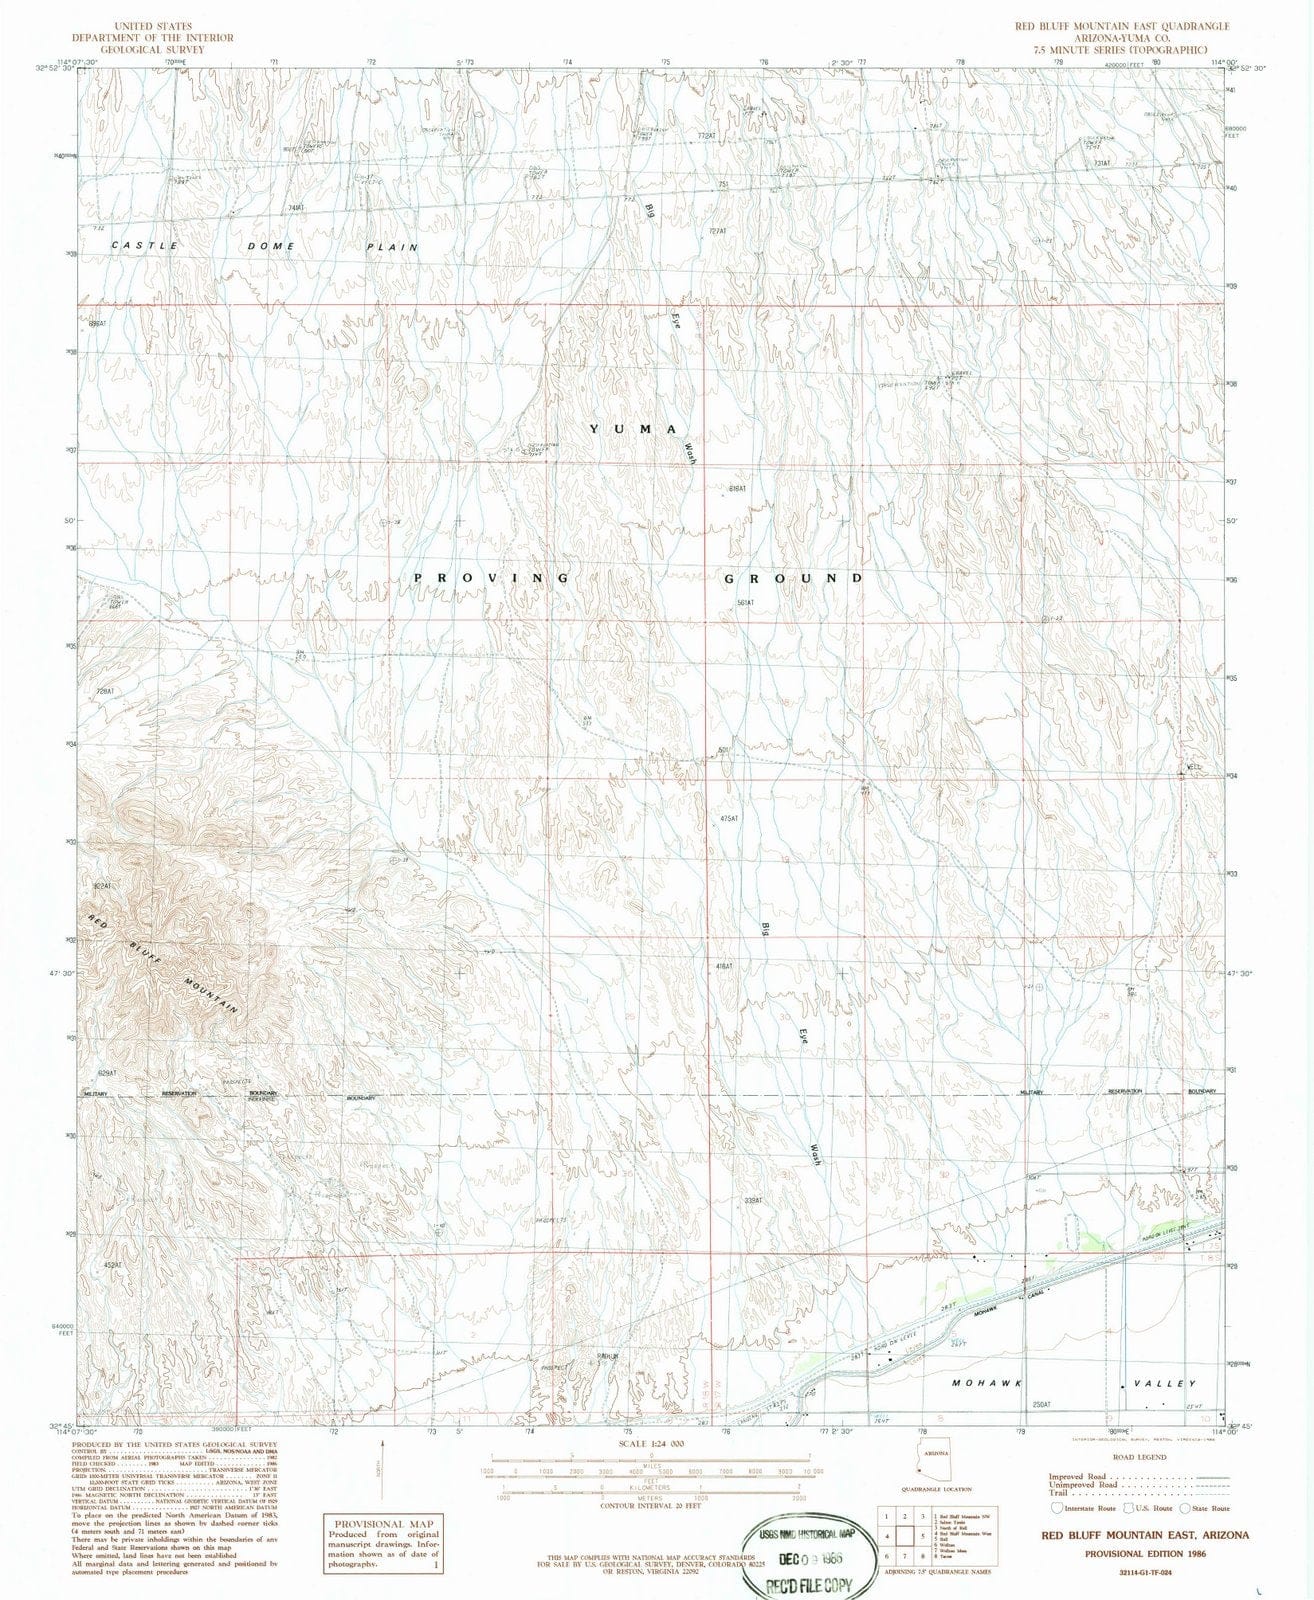 1986 Red Bluff Mountain East, AZ - Arizona - USGS Topographic Map